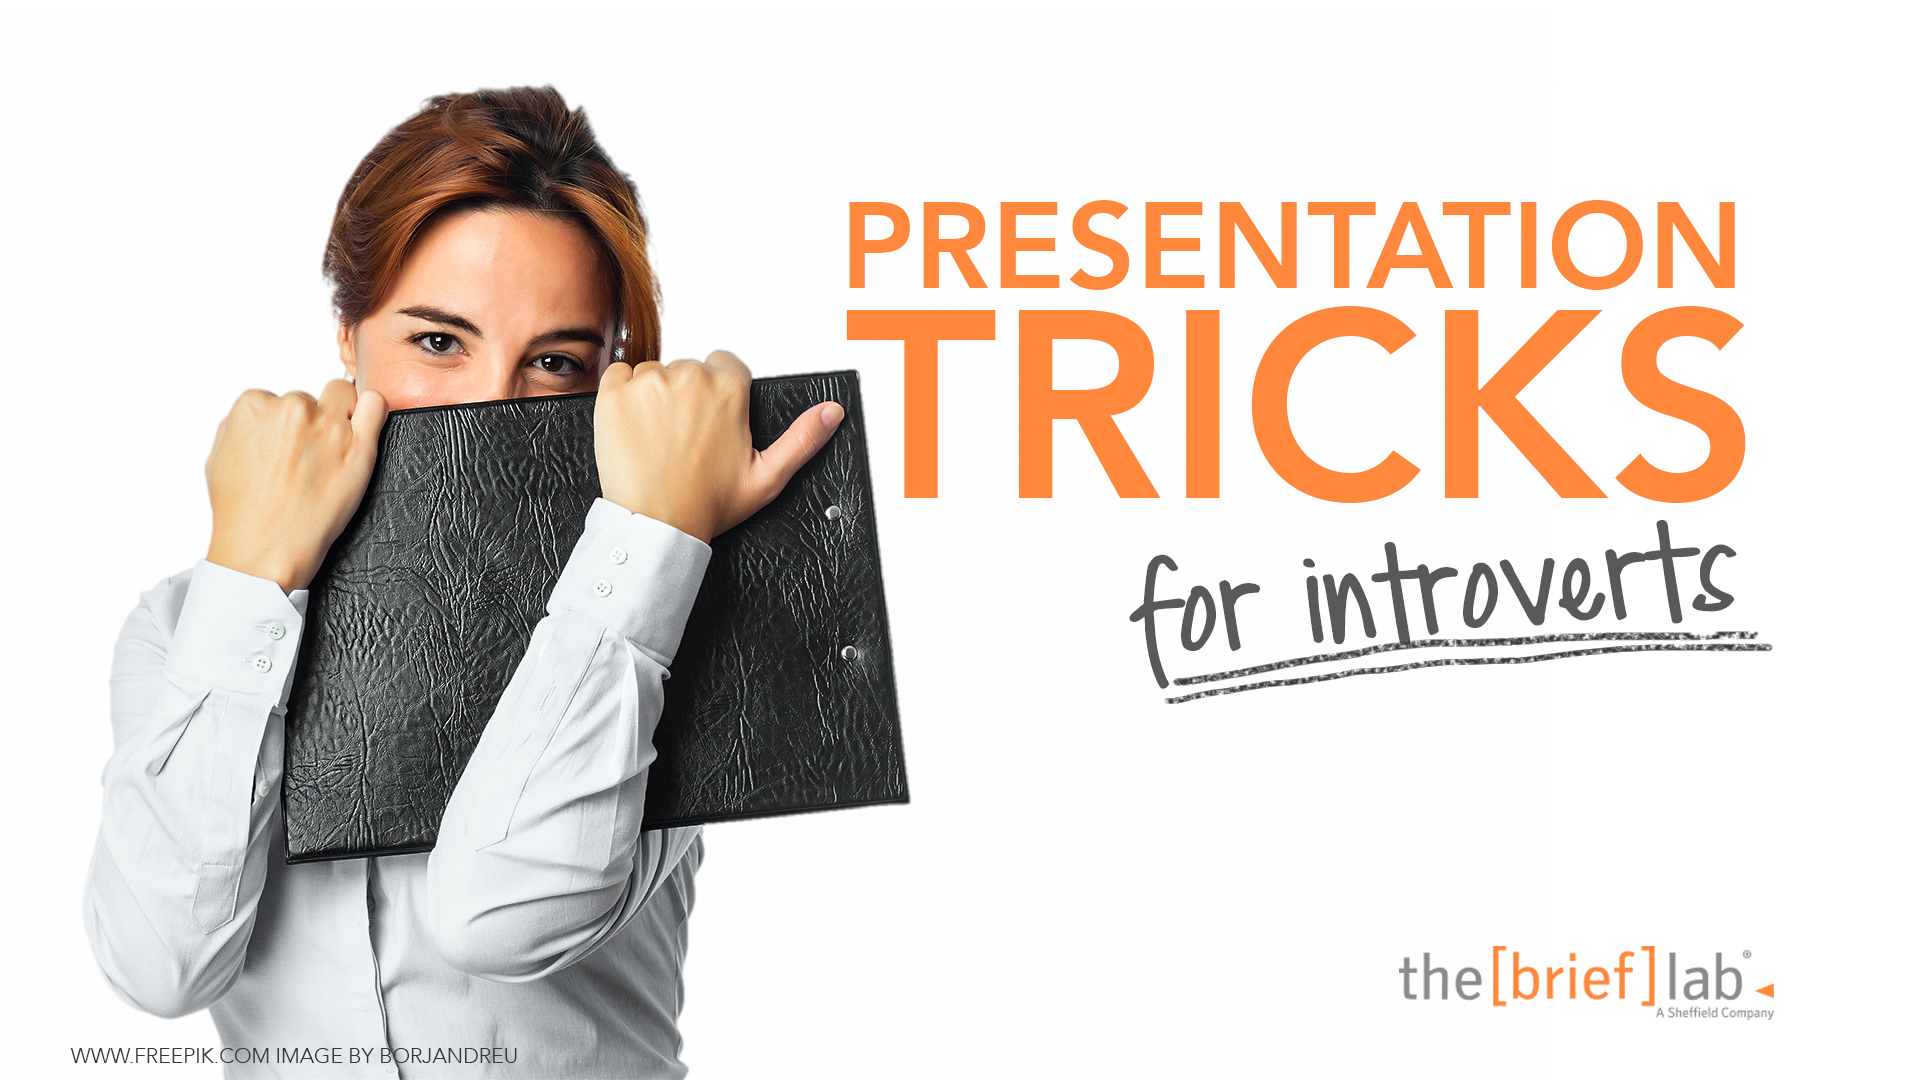 Presentation tricks for introverts